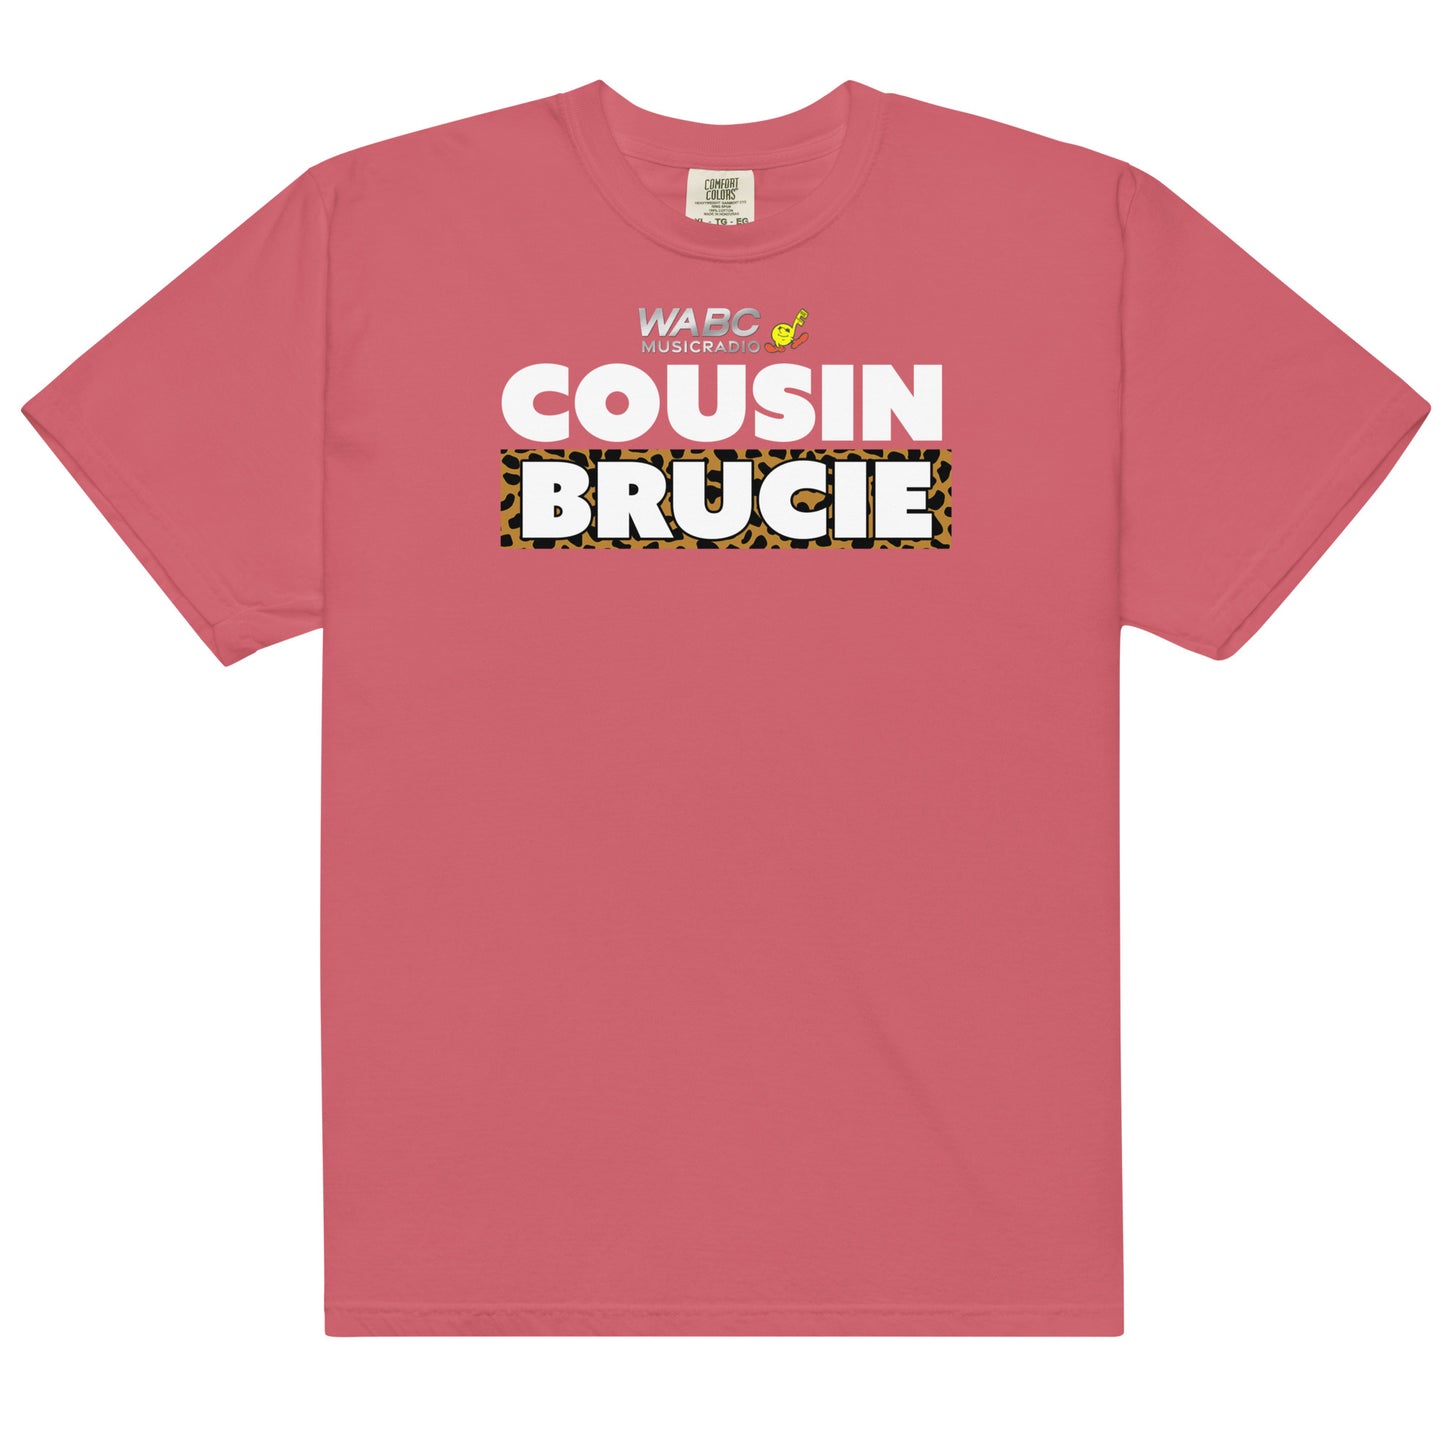 Cousin Brucie WABC Music Radio T-Shirt - Light Logo